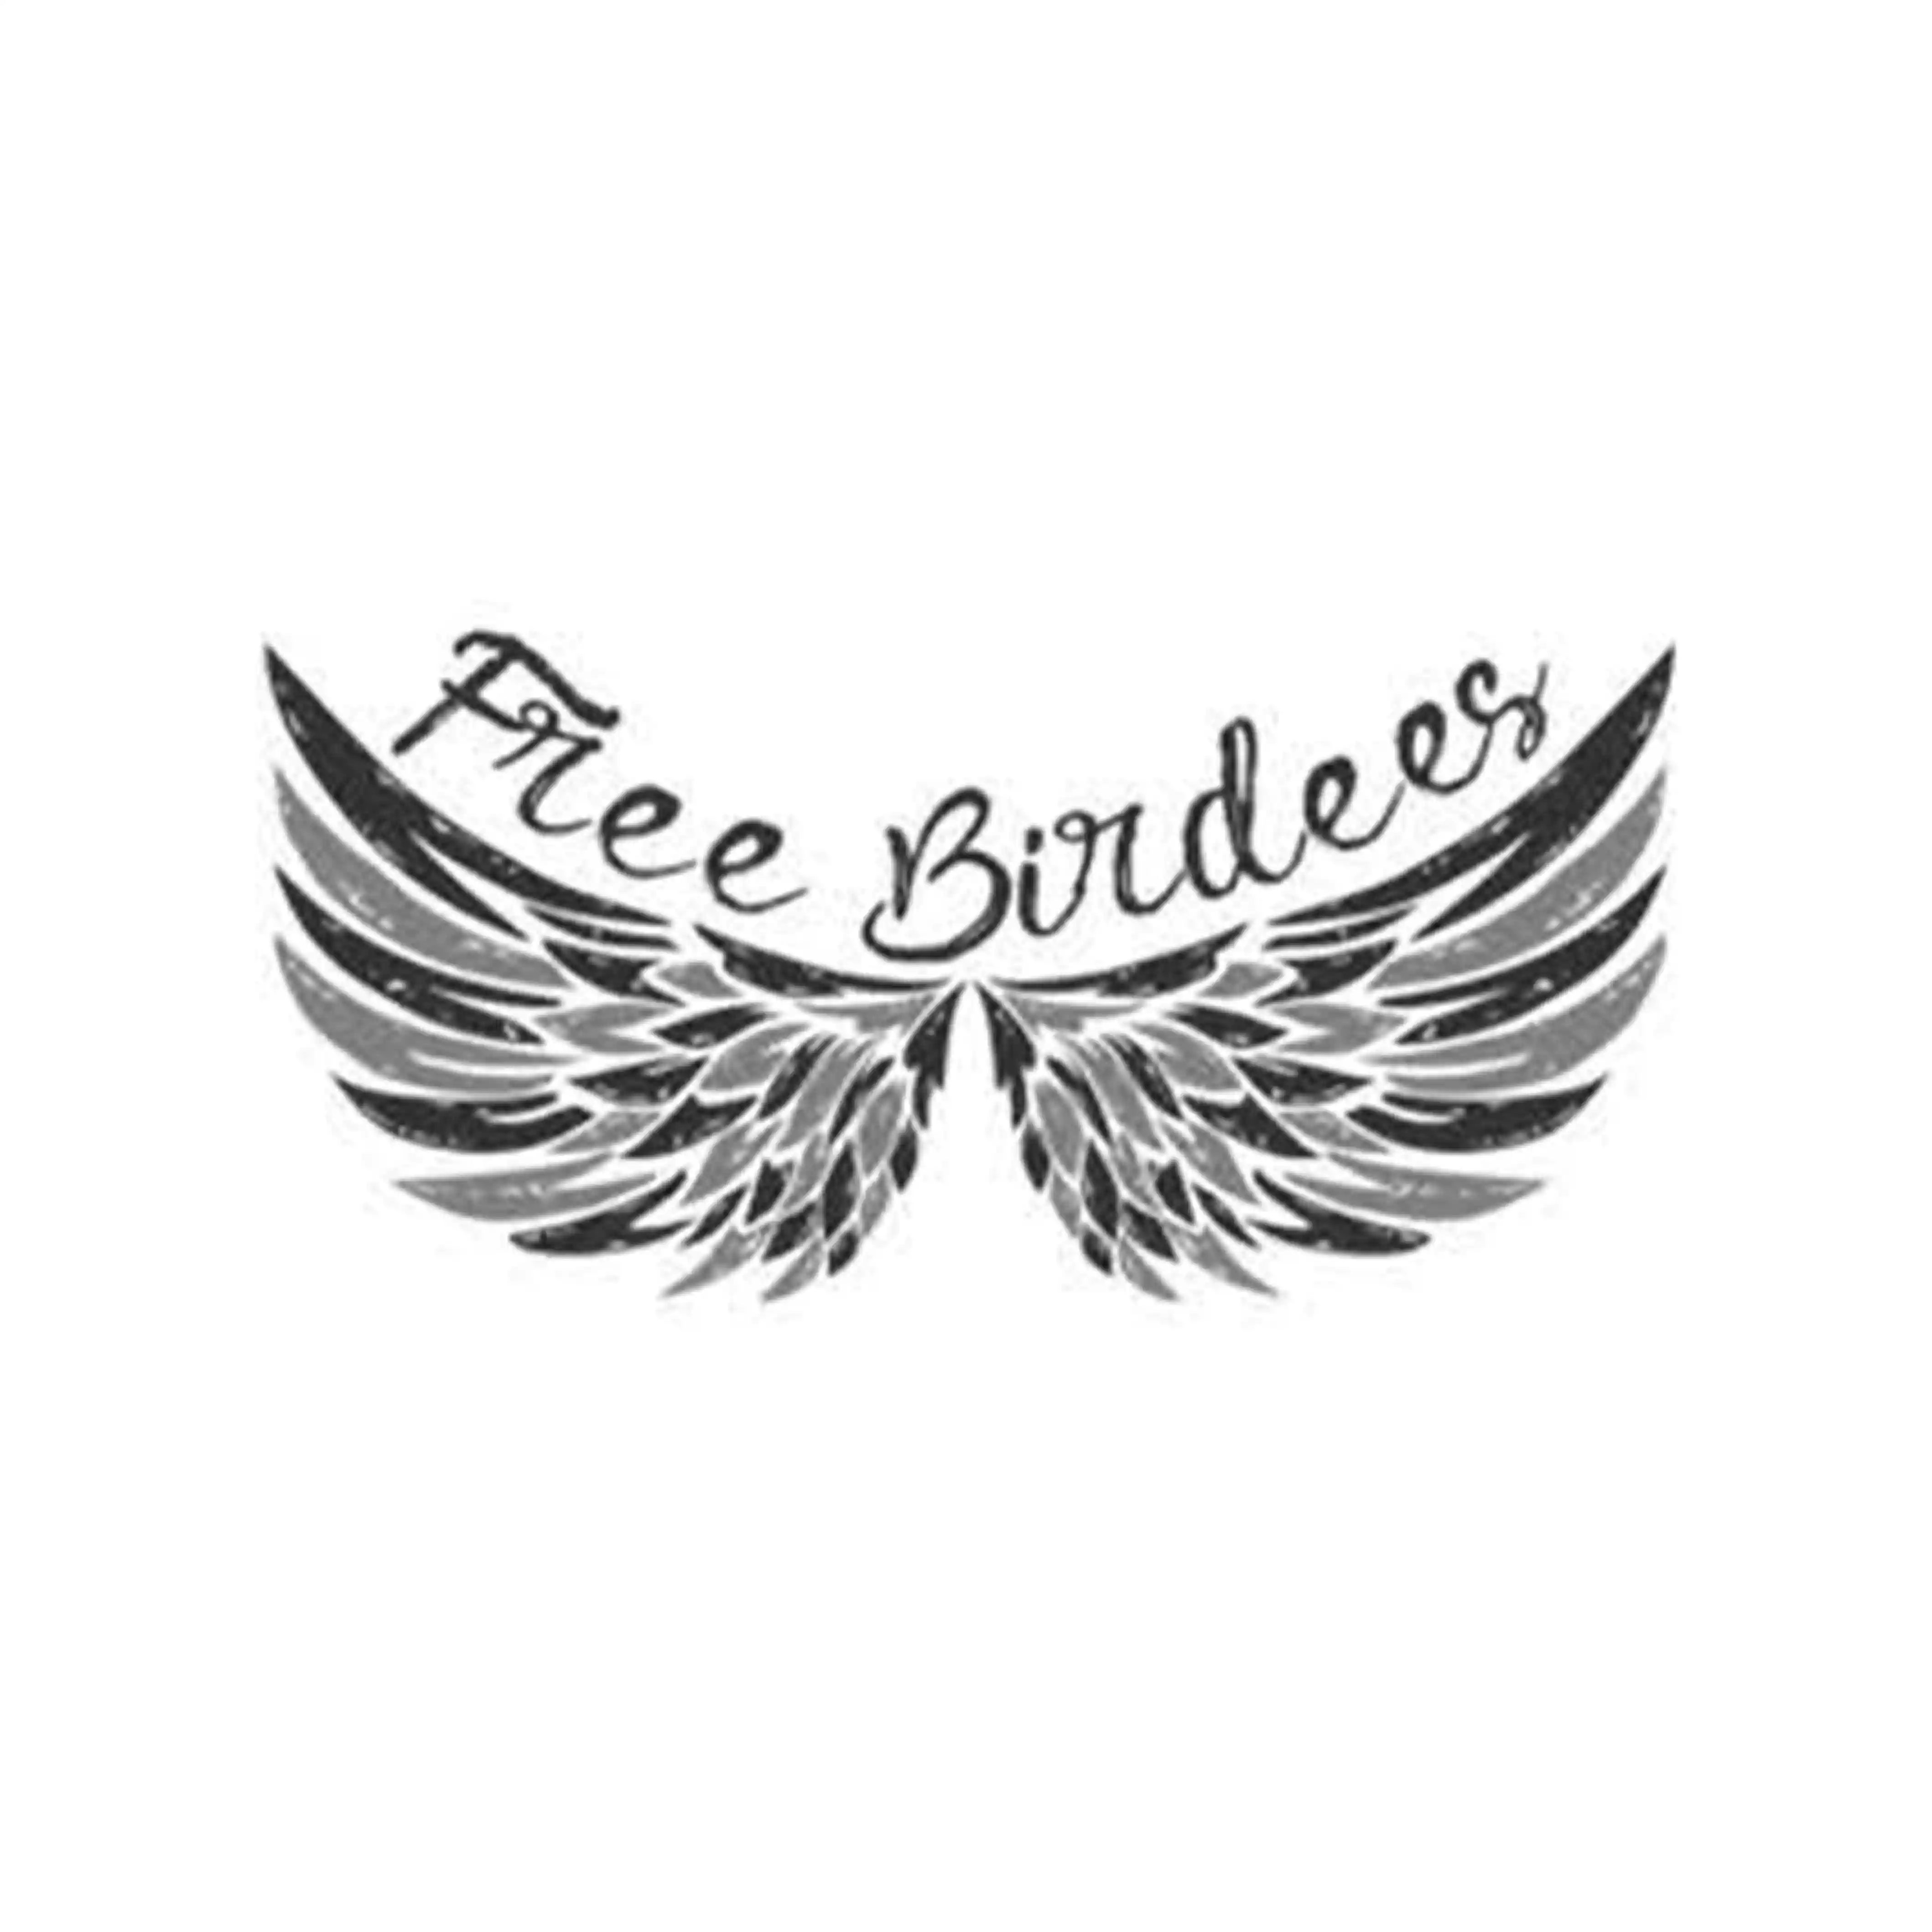 Free Birdees coupon codes